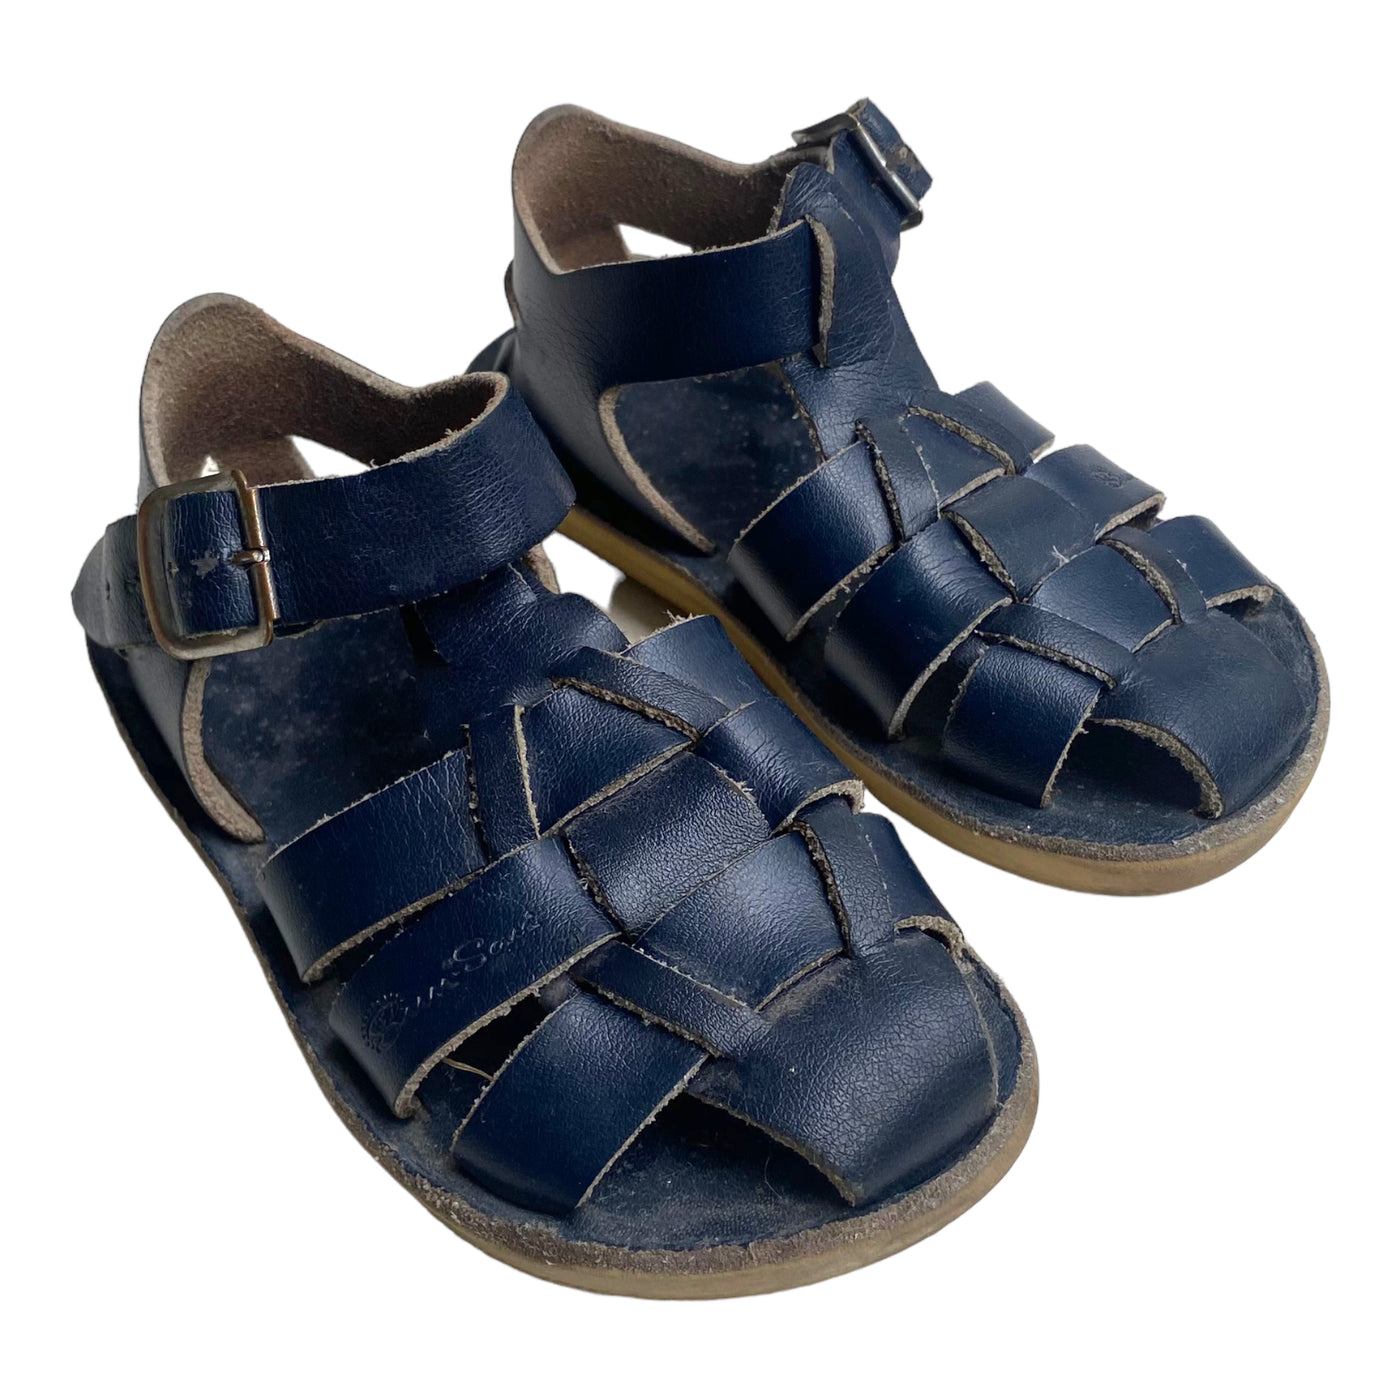 Salt water sandals blue size 7 / 23